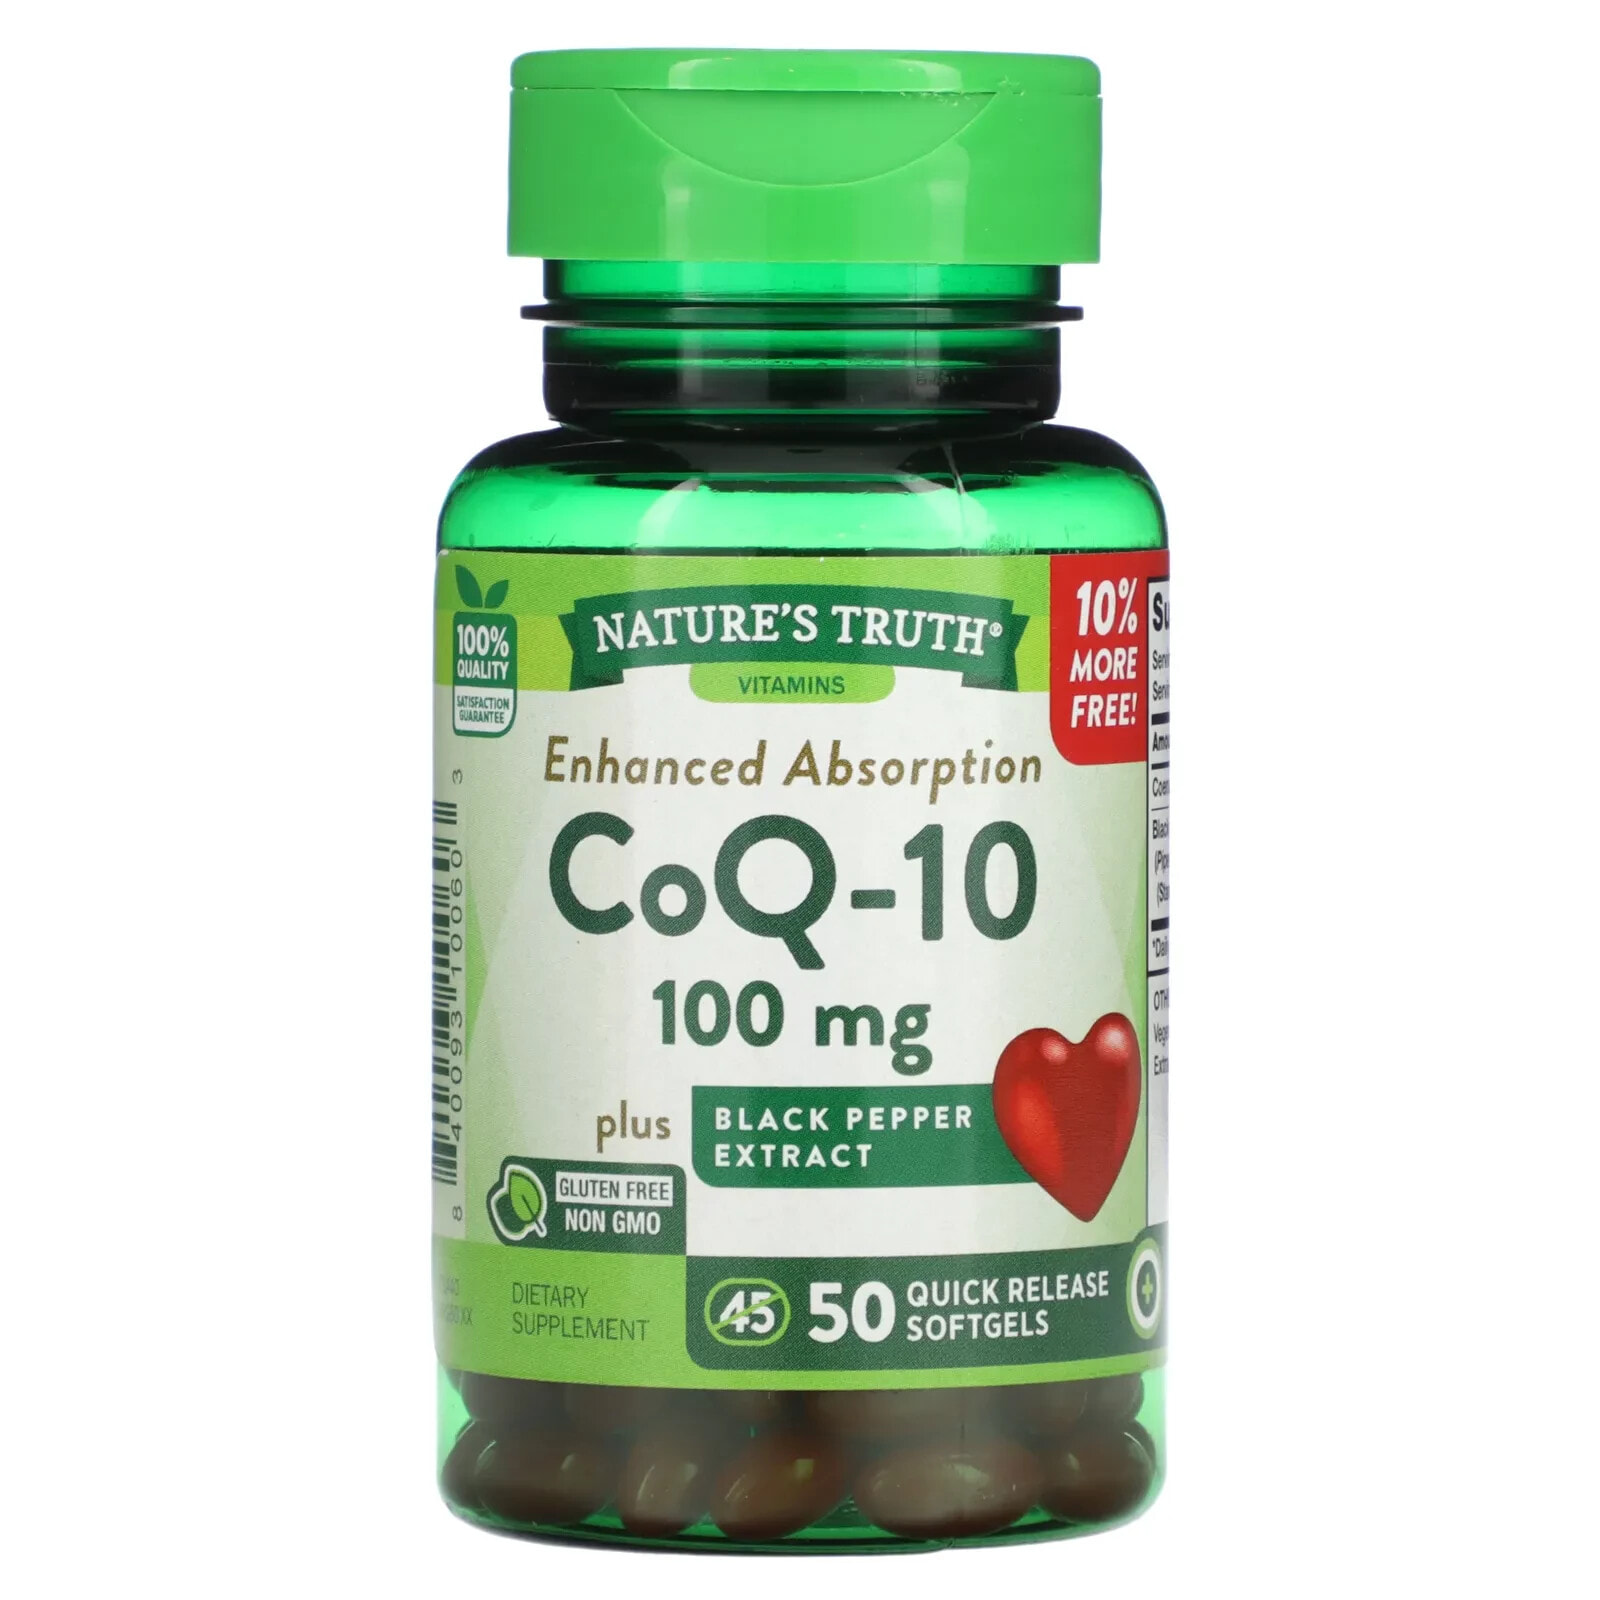 Nature's Truth, Enhanced Absorbs, CoQ-10, 200 мг, 50 капсул с быстрым высвобождением